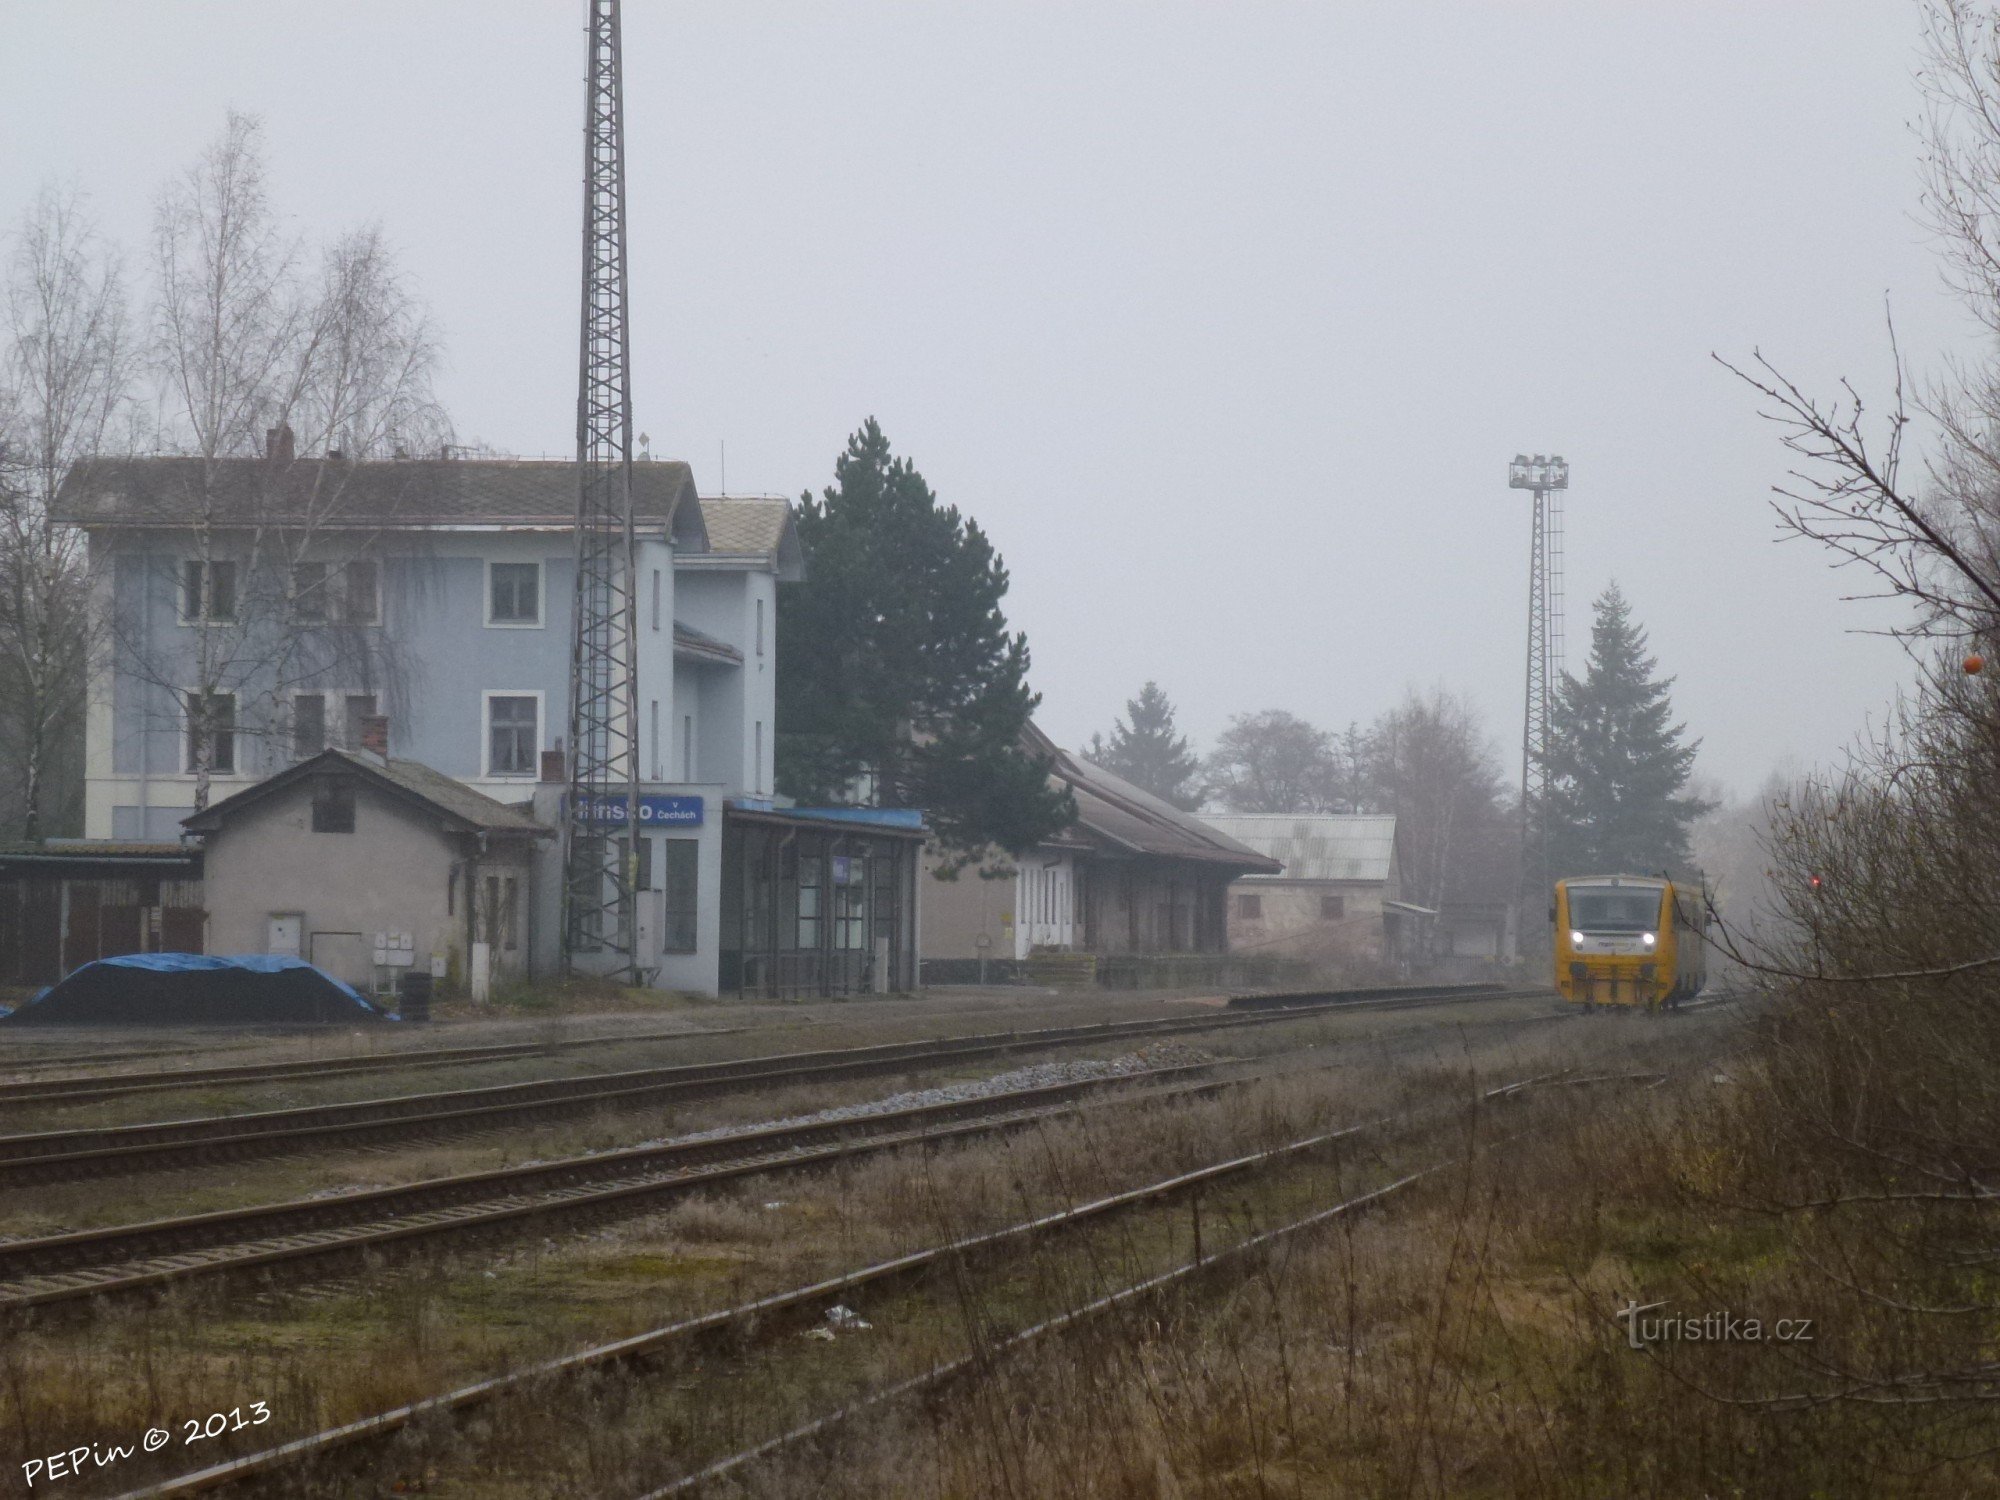 Hlinsko en Bohemia, estación de tren, patio de vías